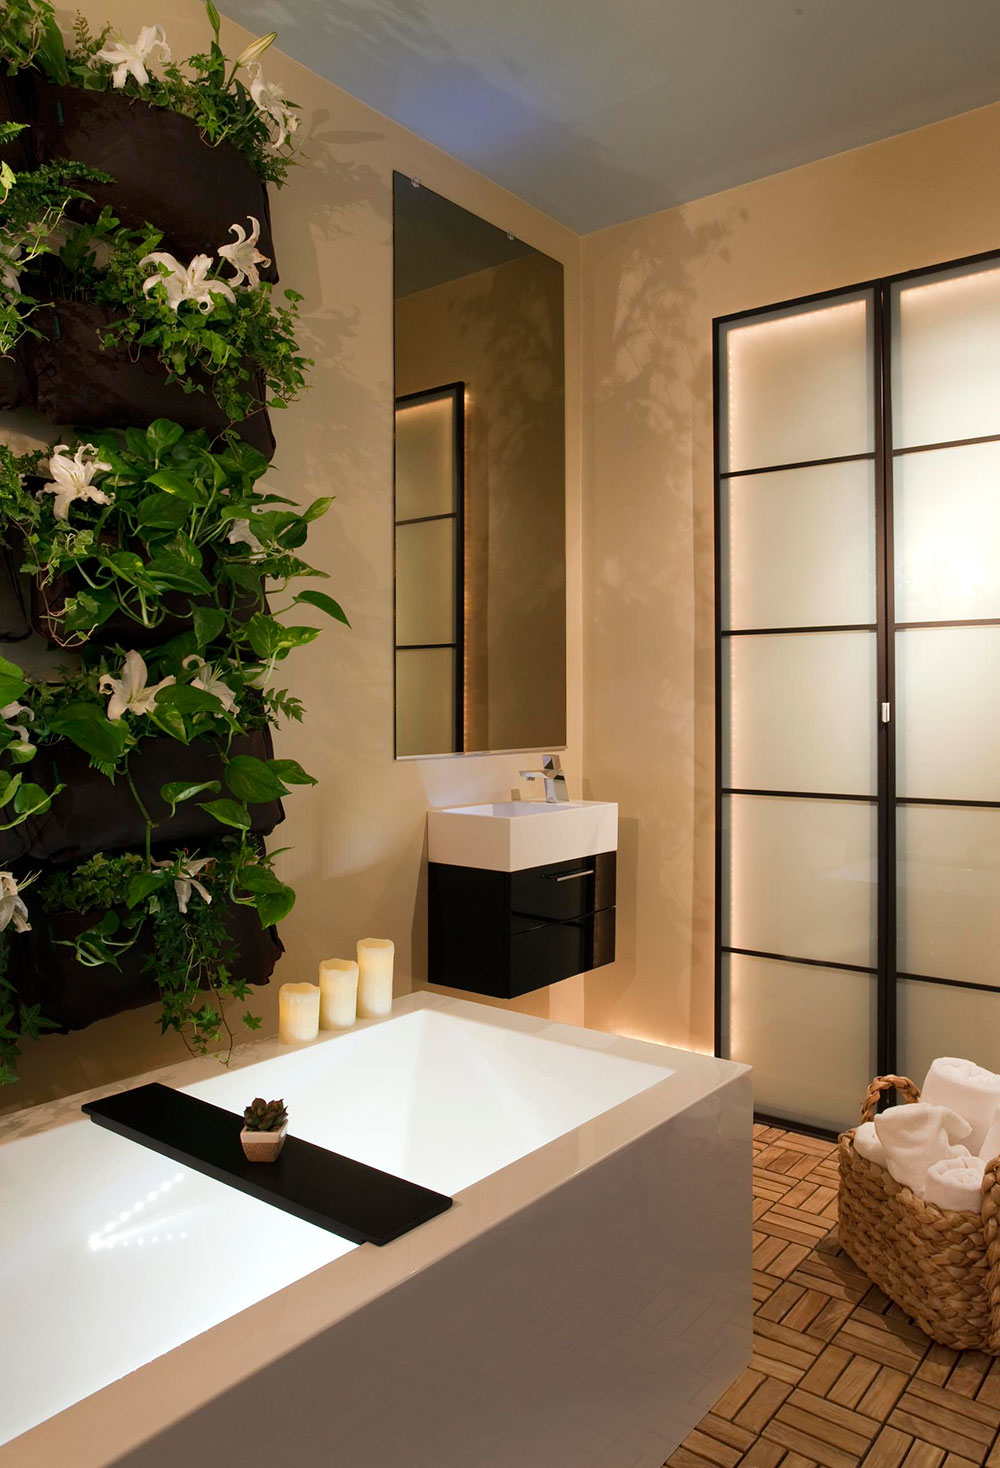 Tips-for-spa-bathroom-design-ideas Tips for a spa bathroom makeover